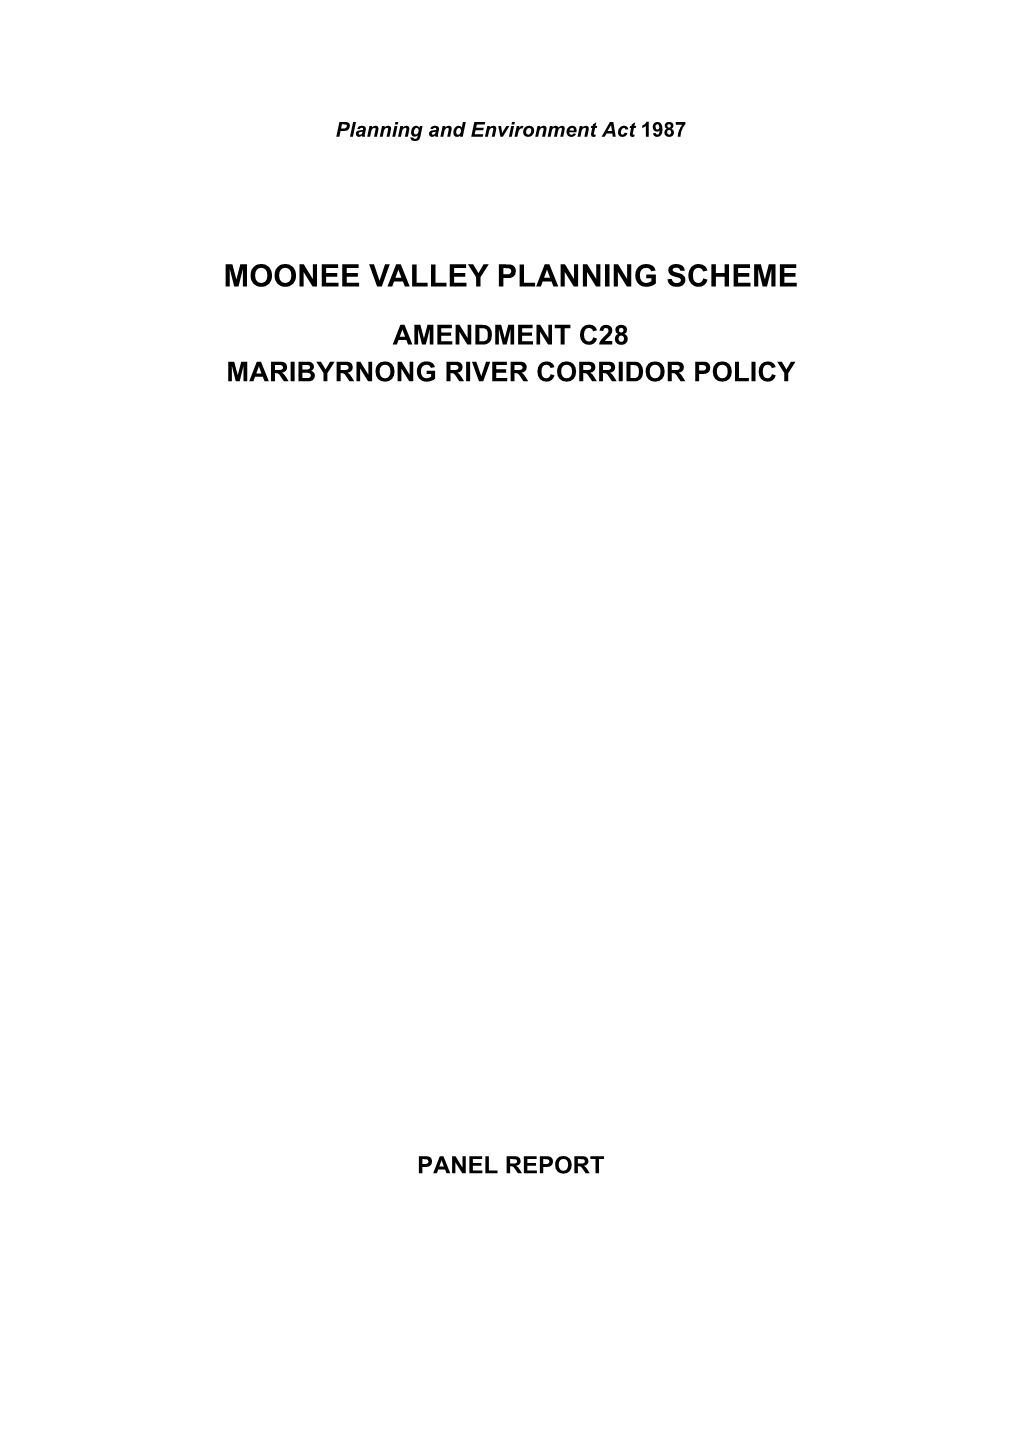 Moonee Valley Planning Scheme